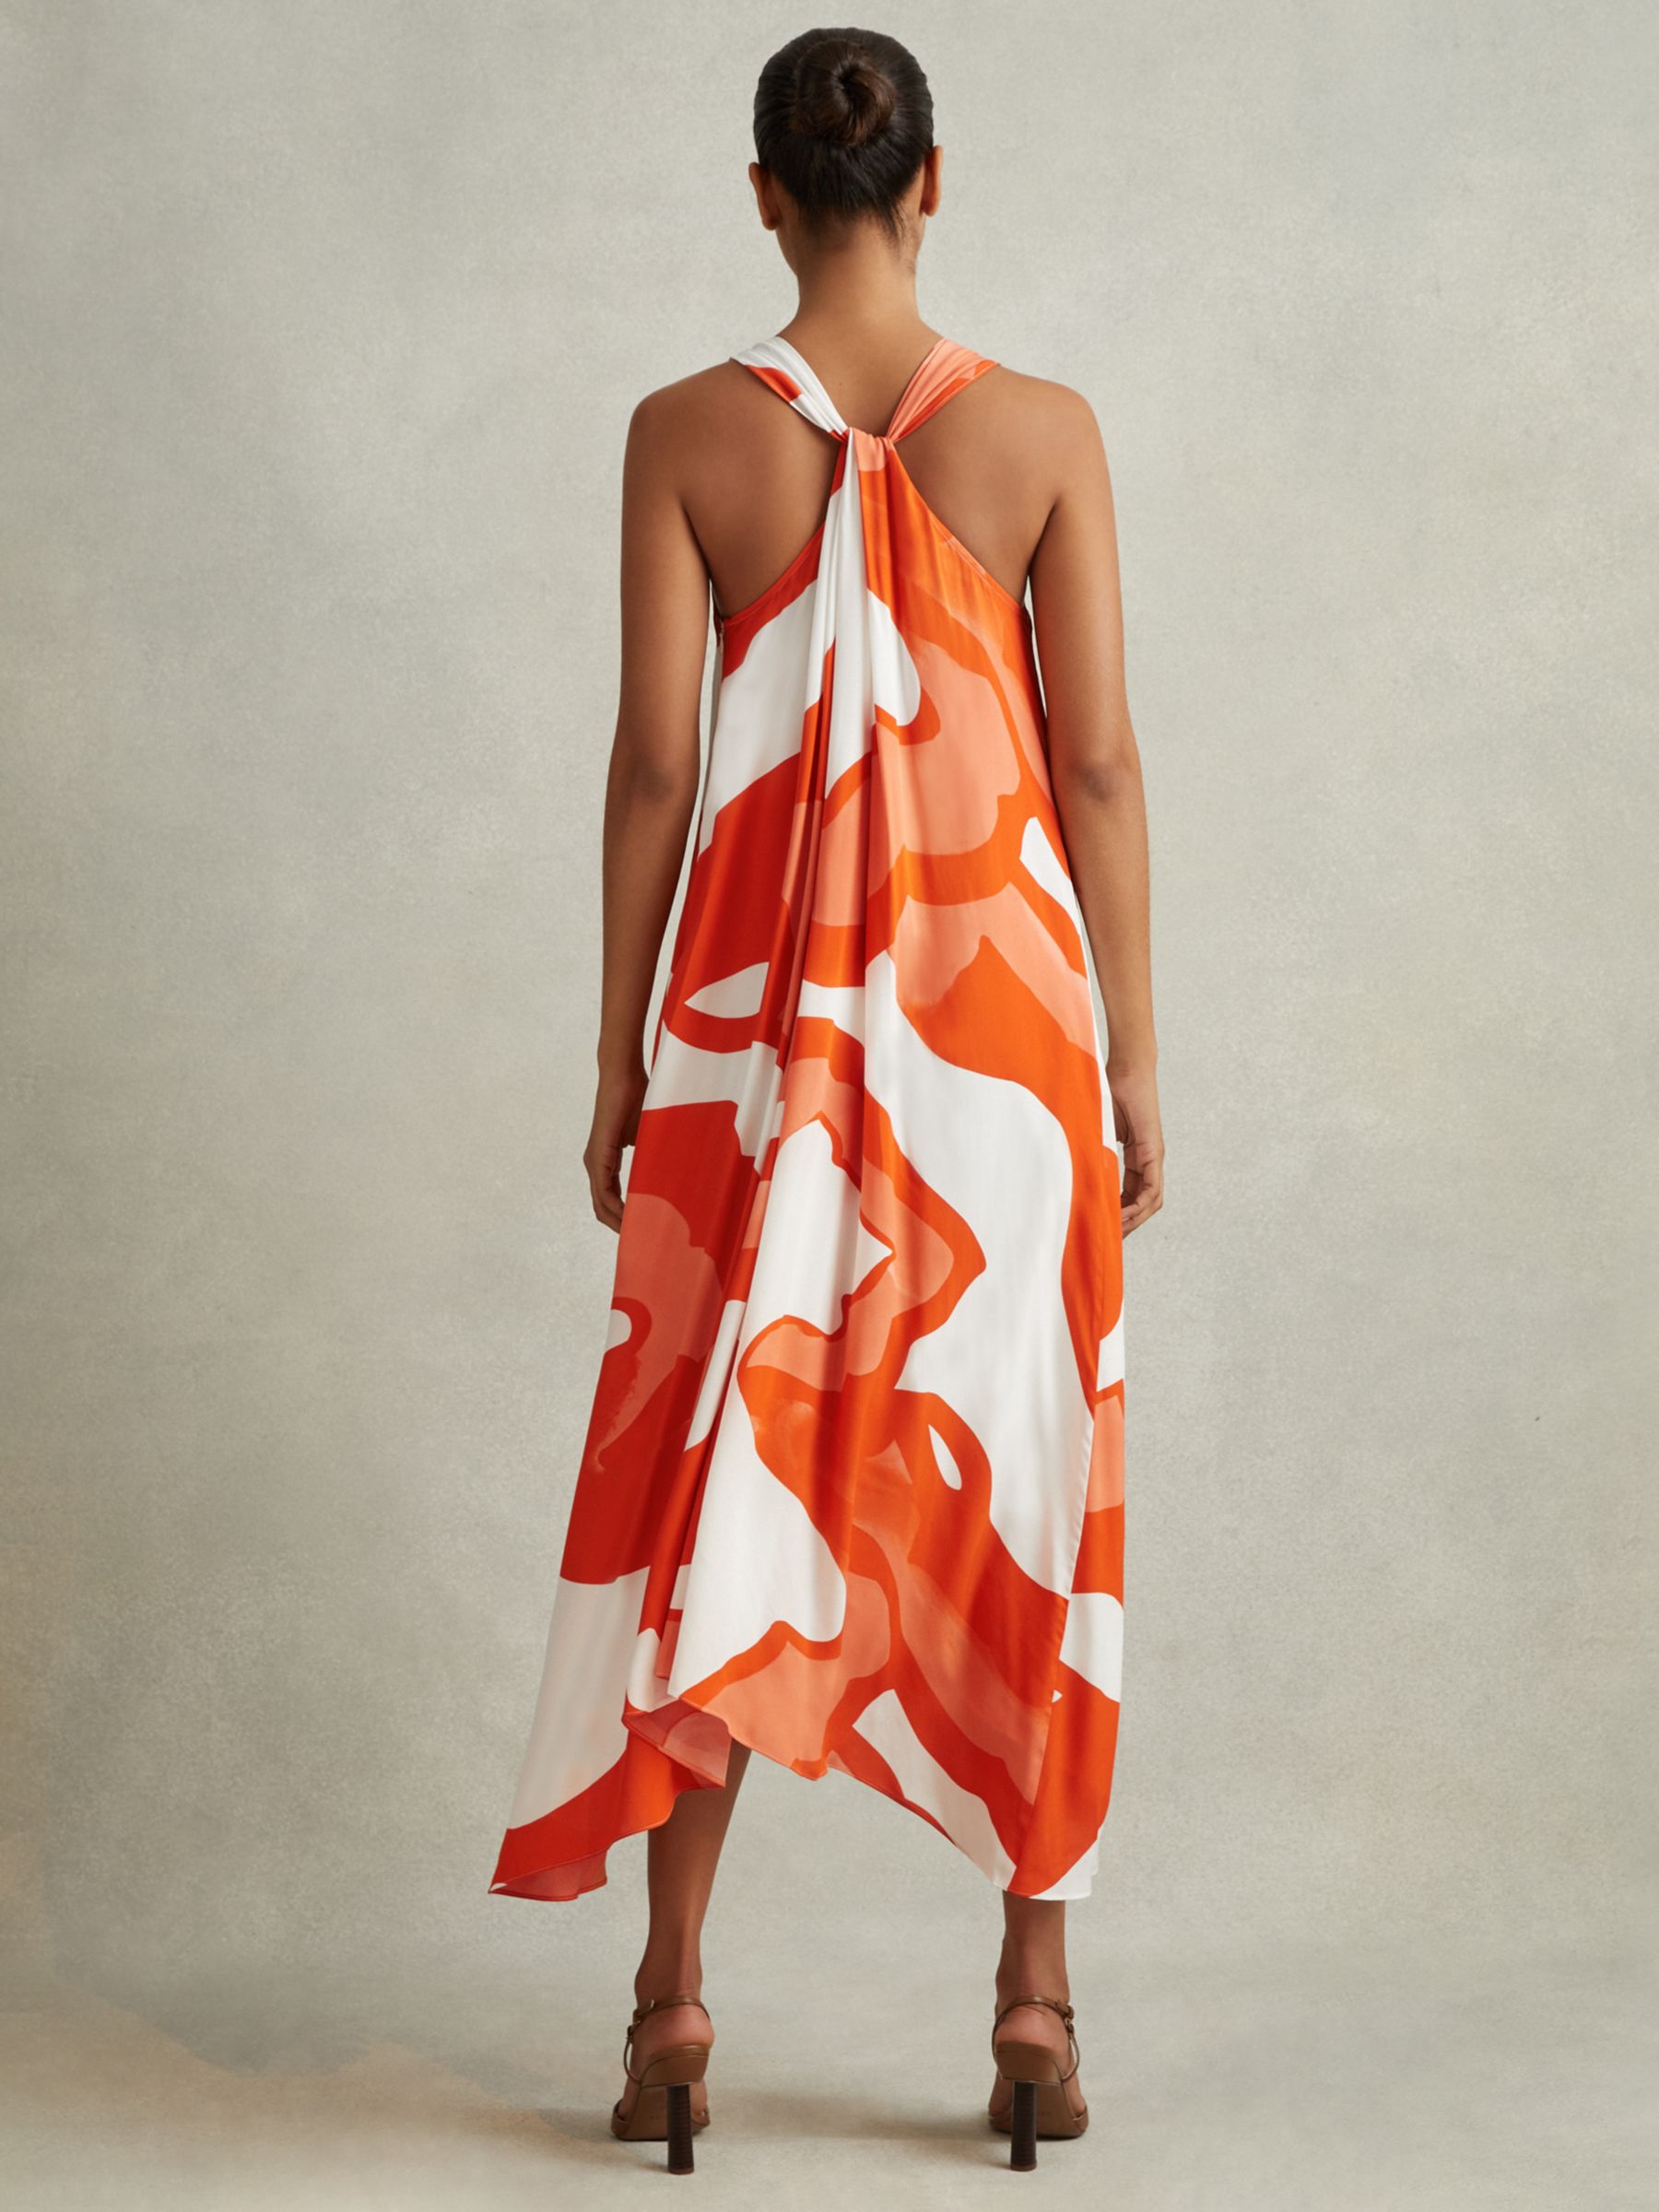 Reiss Avia Abstract Print Dipped Hem Midi Dress, Orange/White, 6